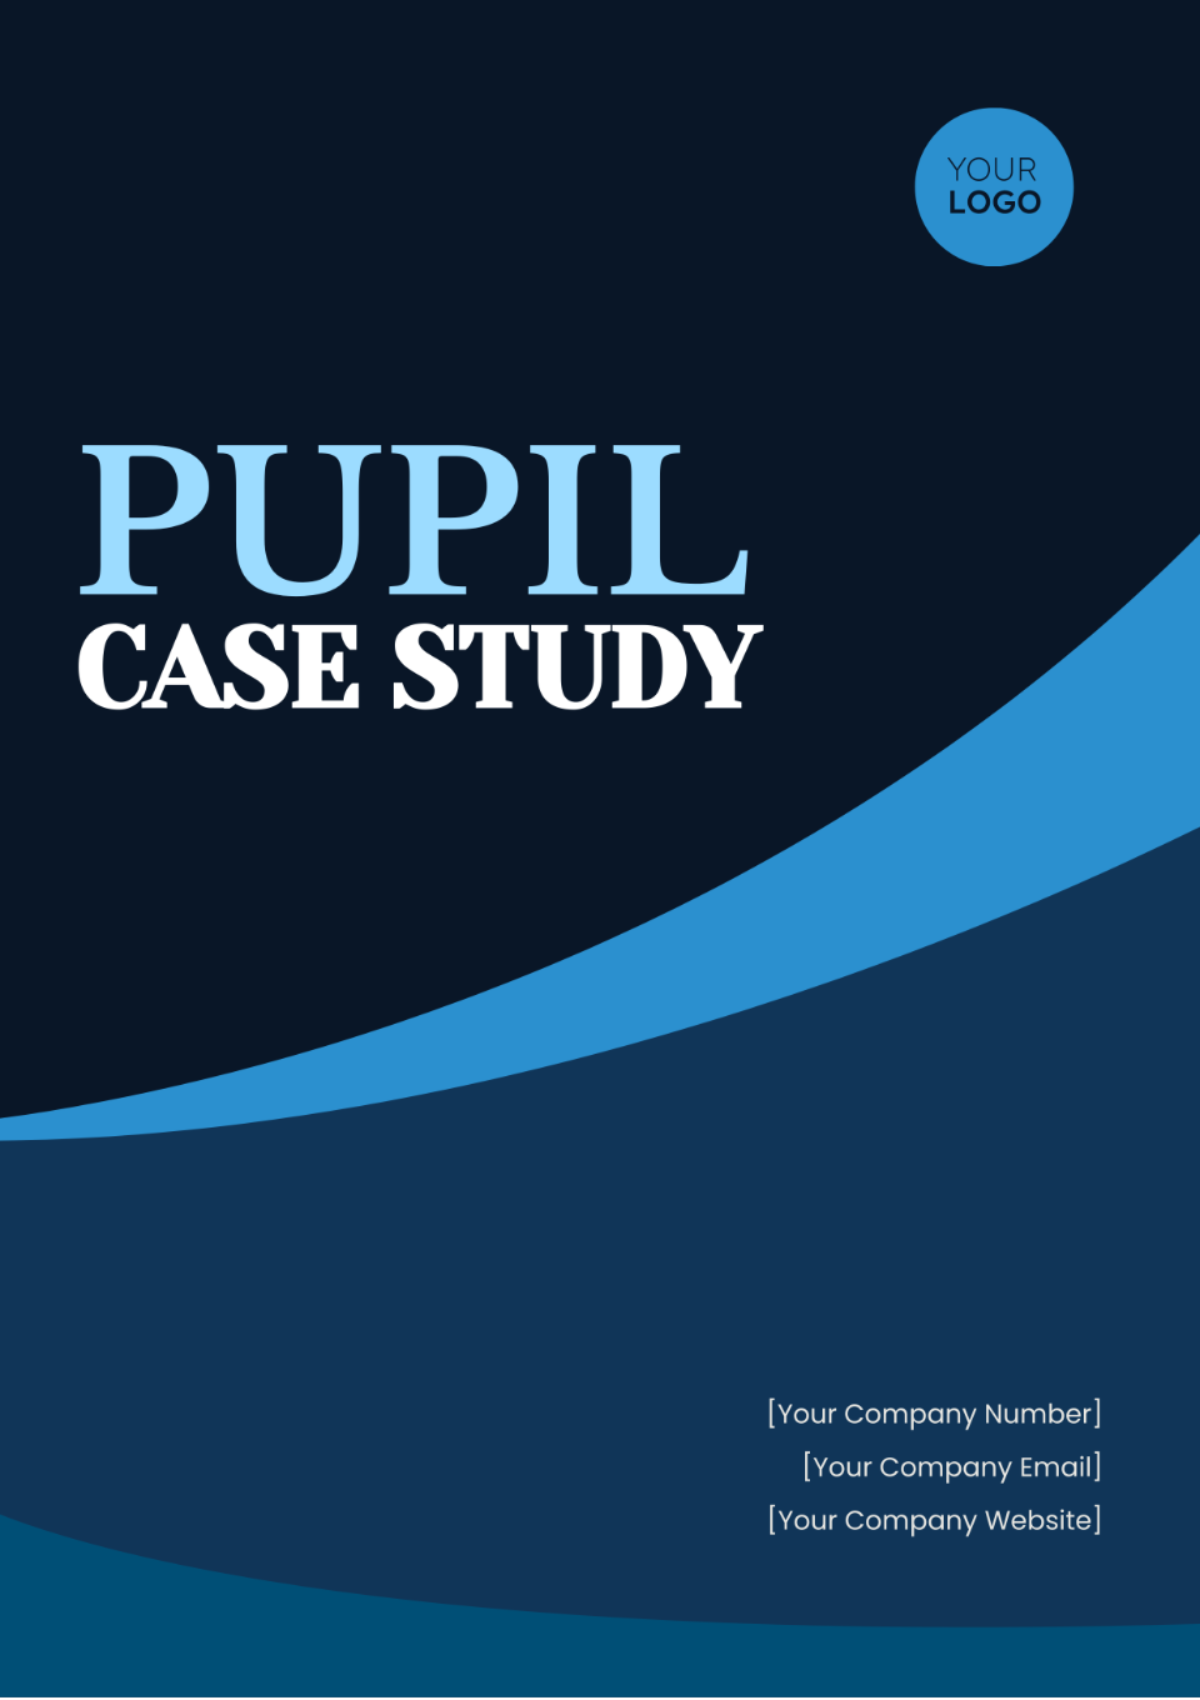 Pupil Case Study Template